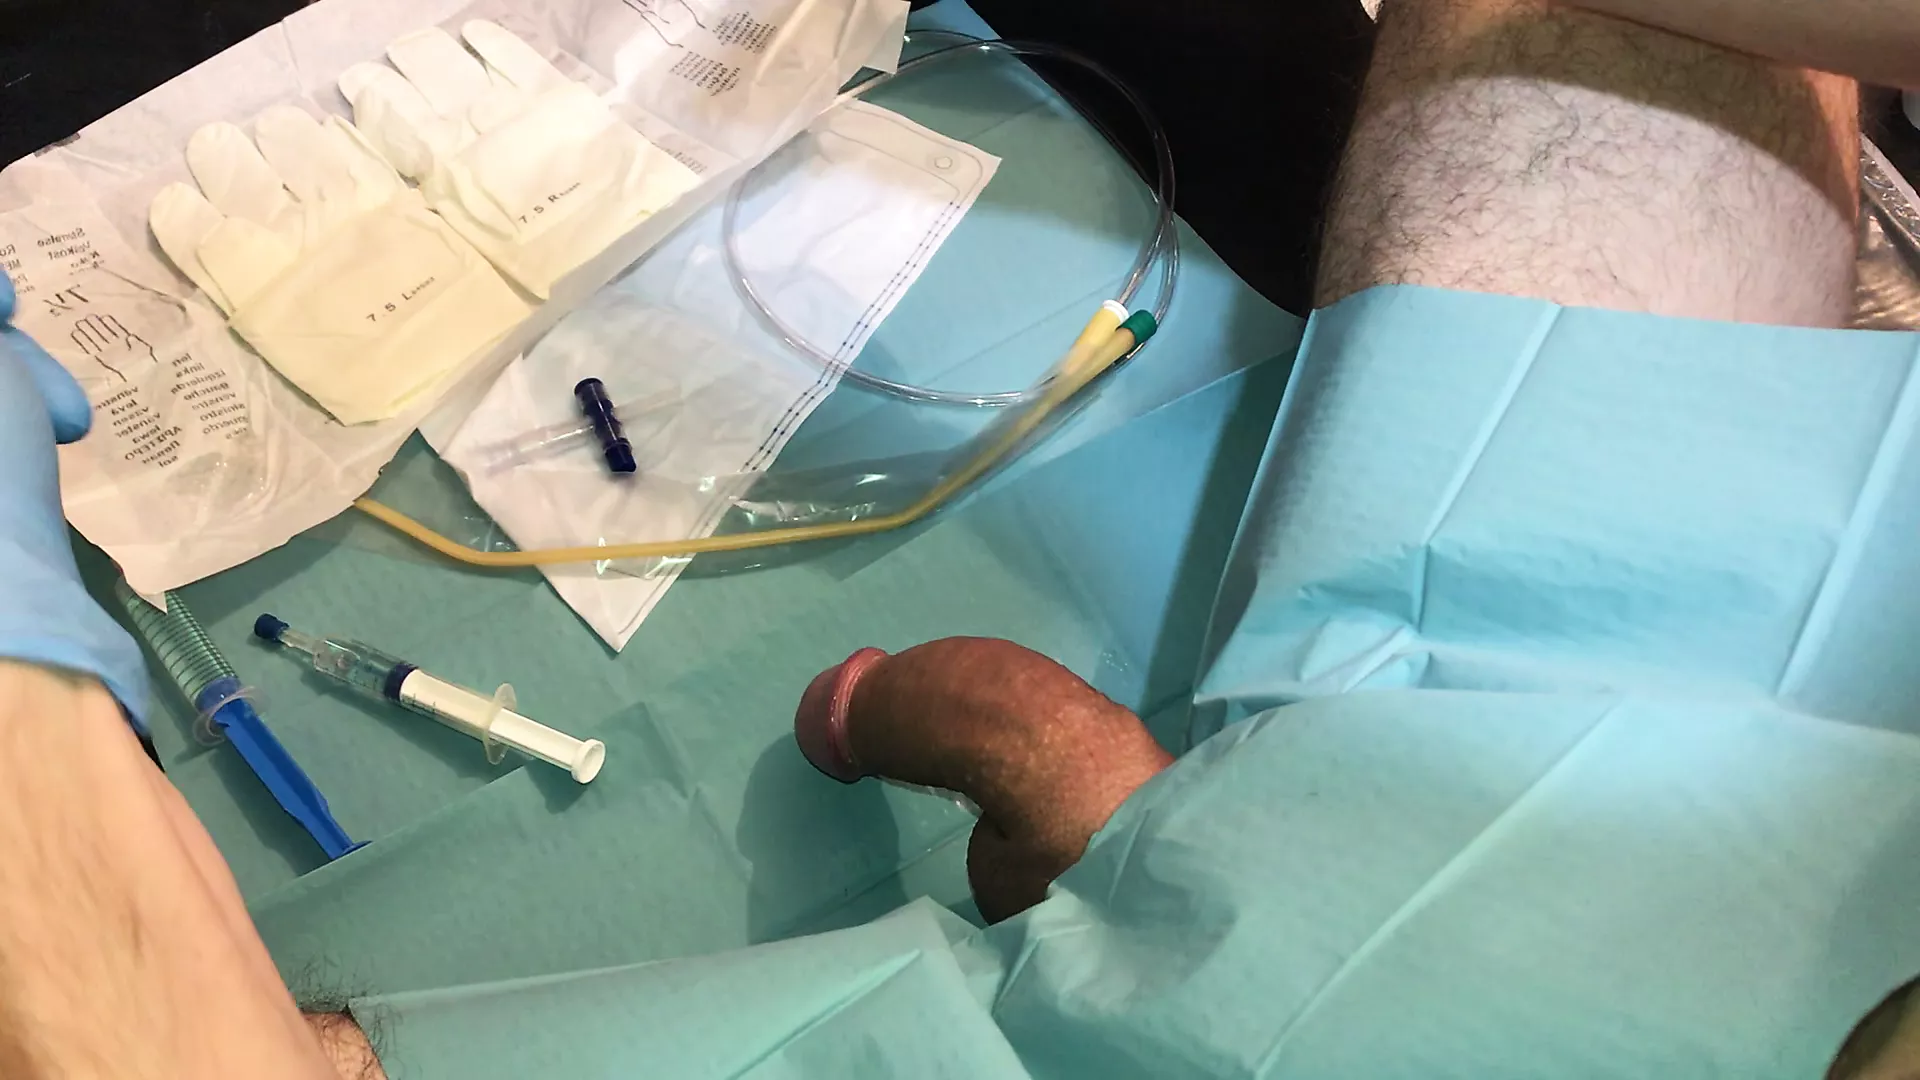 cbt catheter amateur sex pics blog Porn Photos